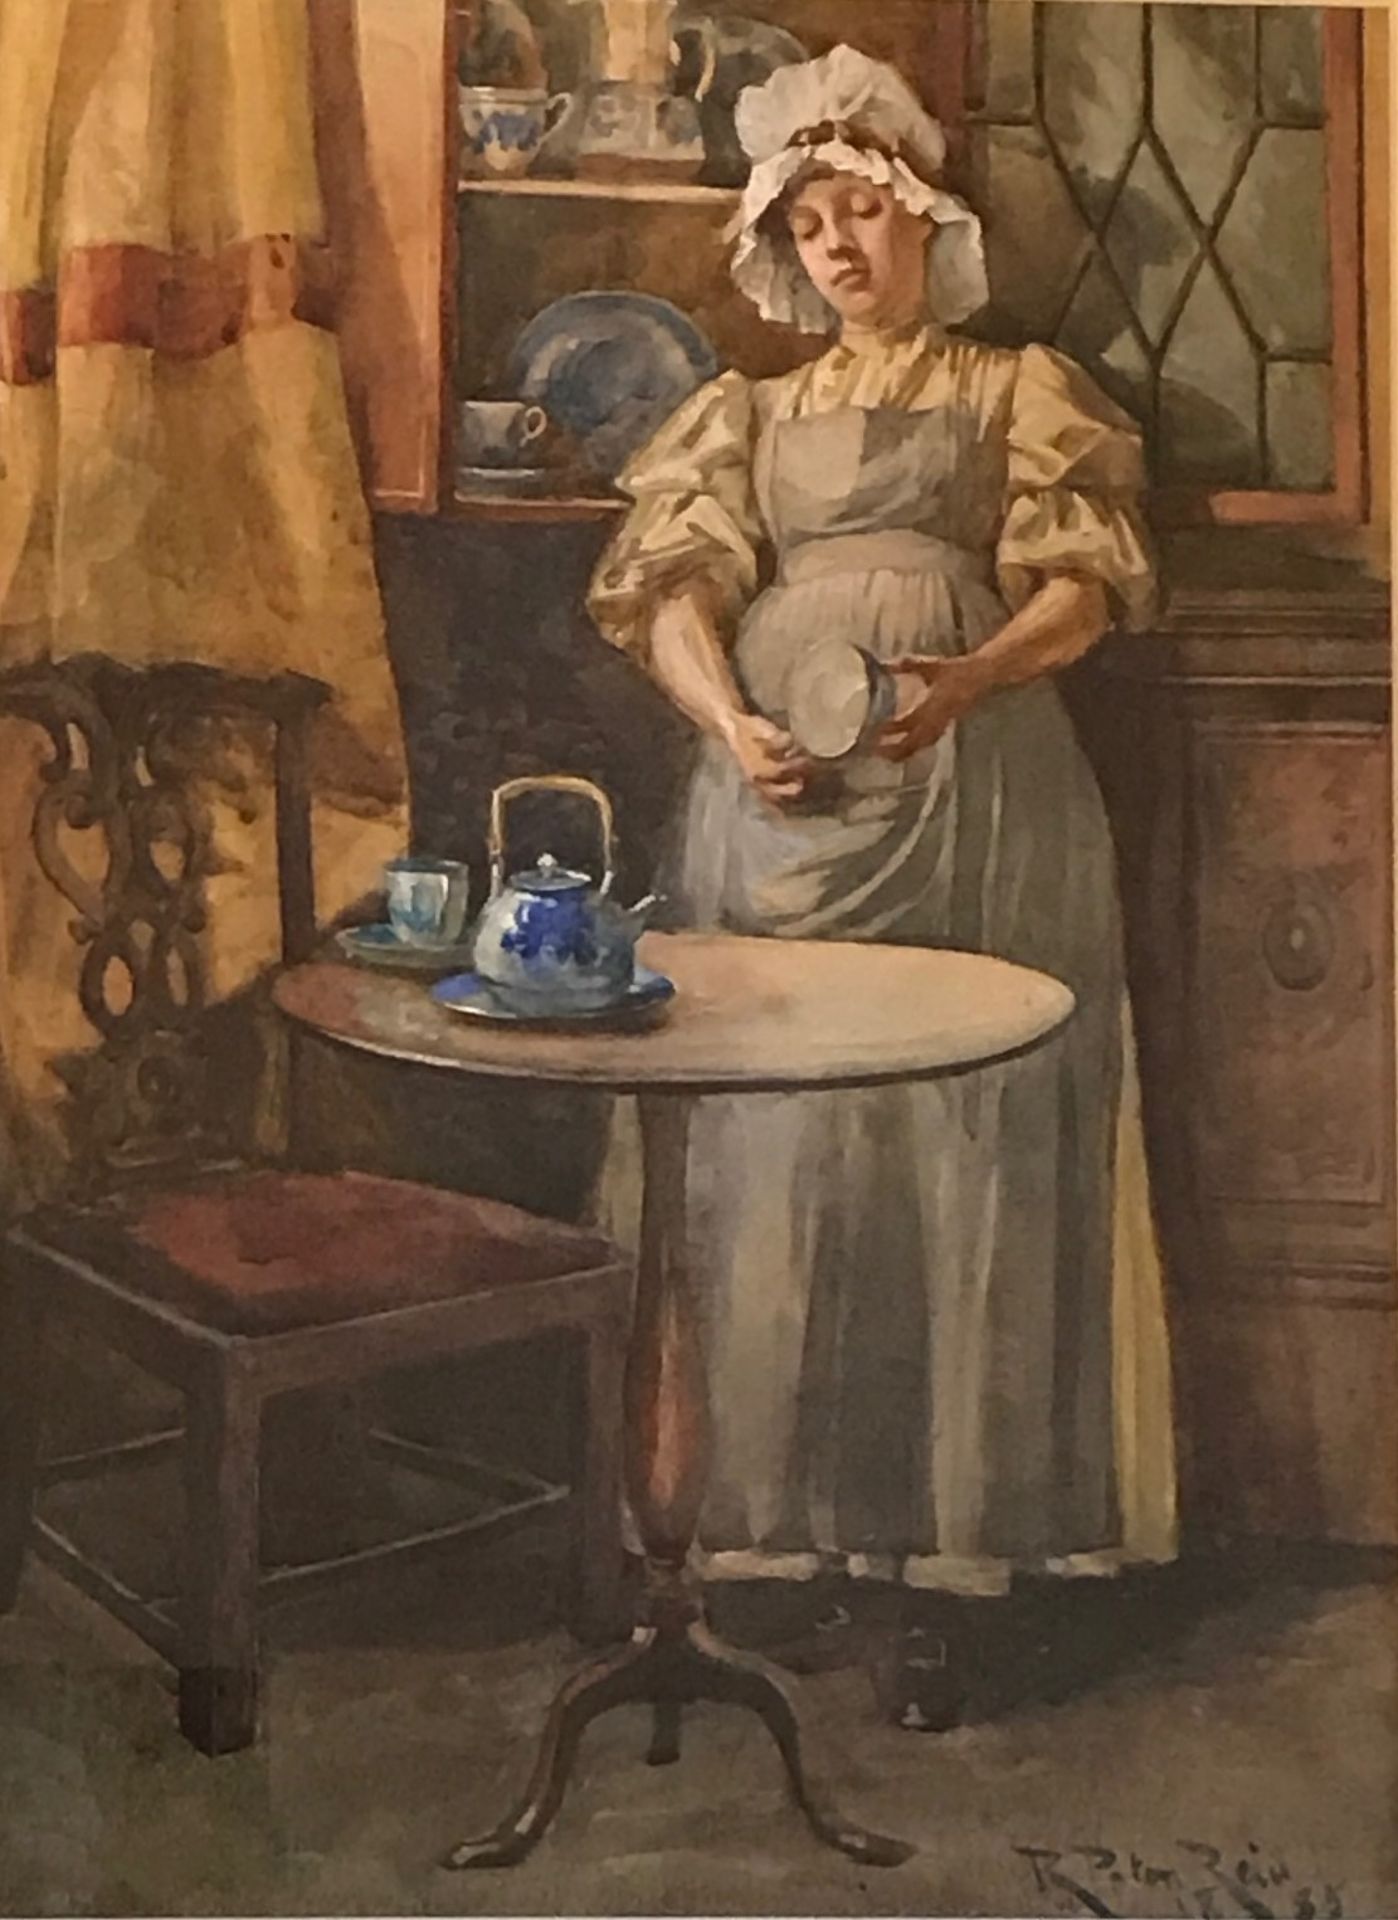 kitchen maid Original watercolour painting by Scottish artist Robert Payton Reid A.R.S.A